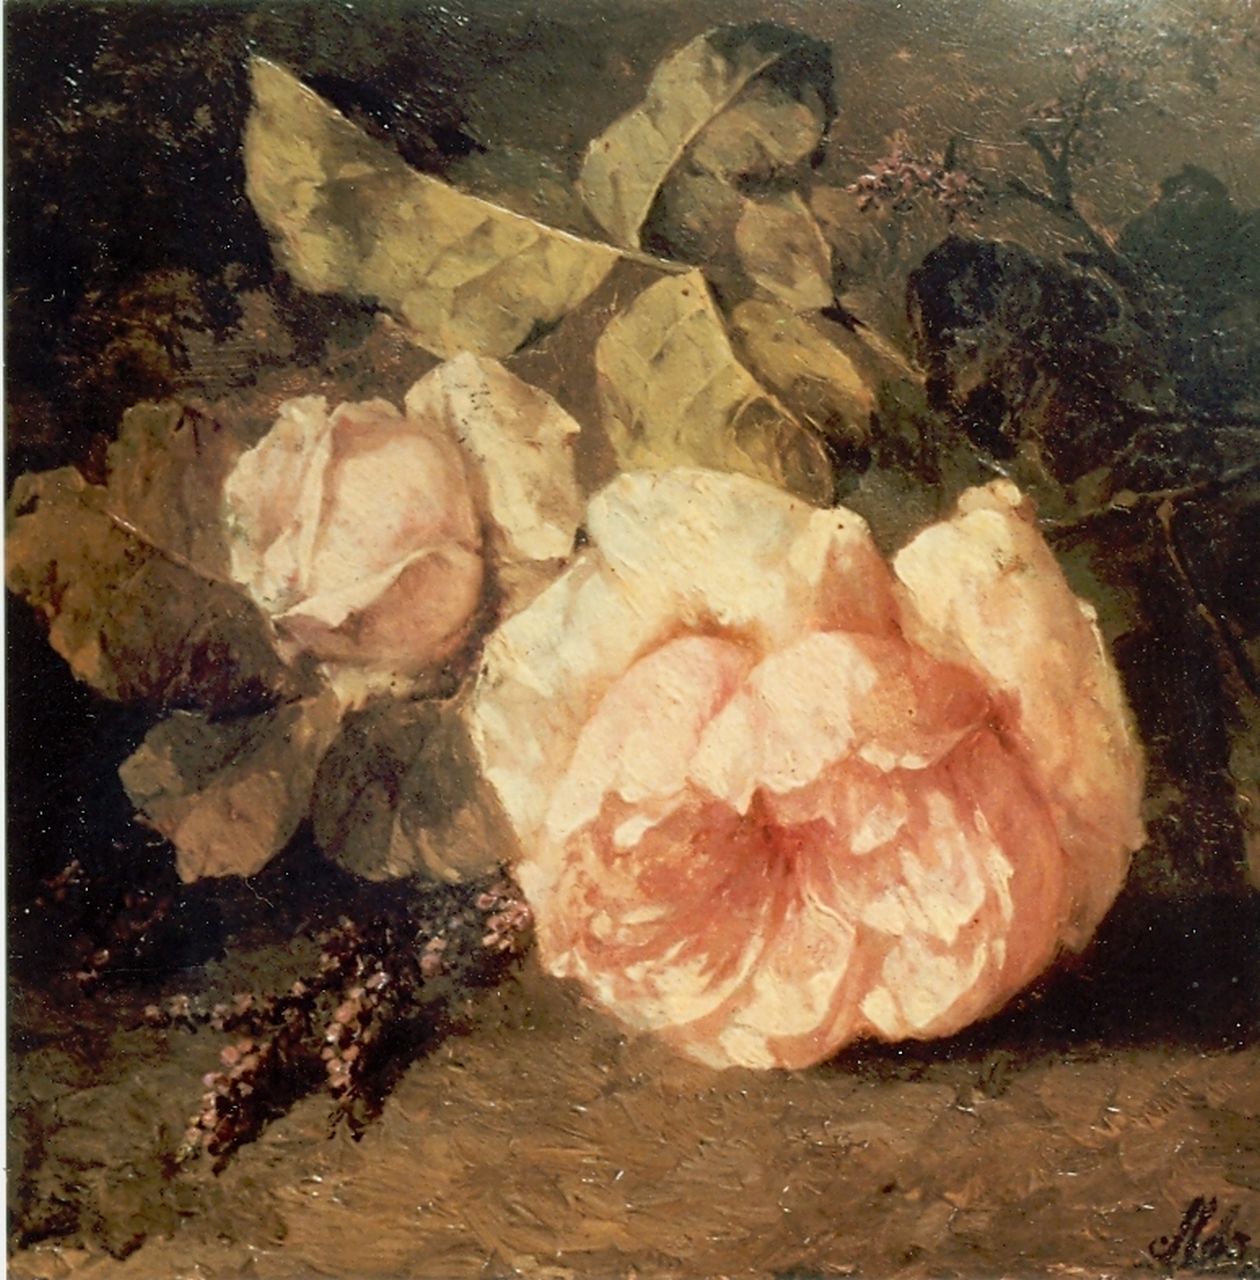 Roosenboom M.C.J.W.H.  | 'Margaretha' Cornelia Johanna Wilhelmina Henriëtta Roosenboom, Pink roses, oil on panel 22.0 x 30.0 cm, signed l.r.